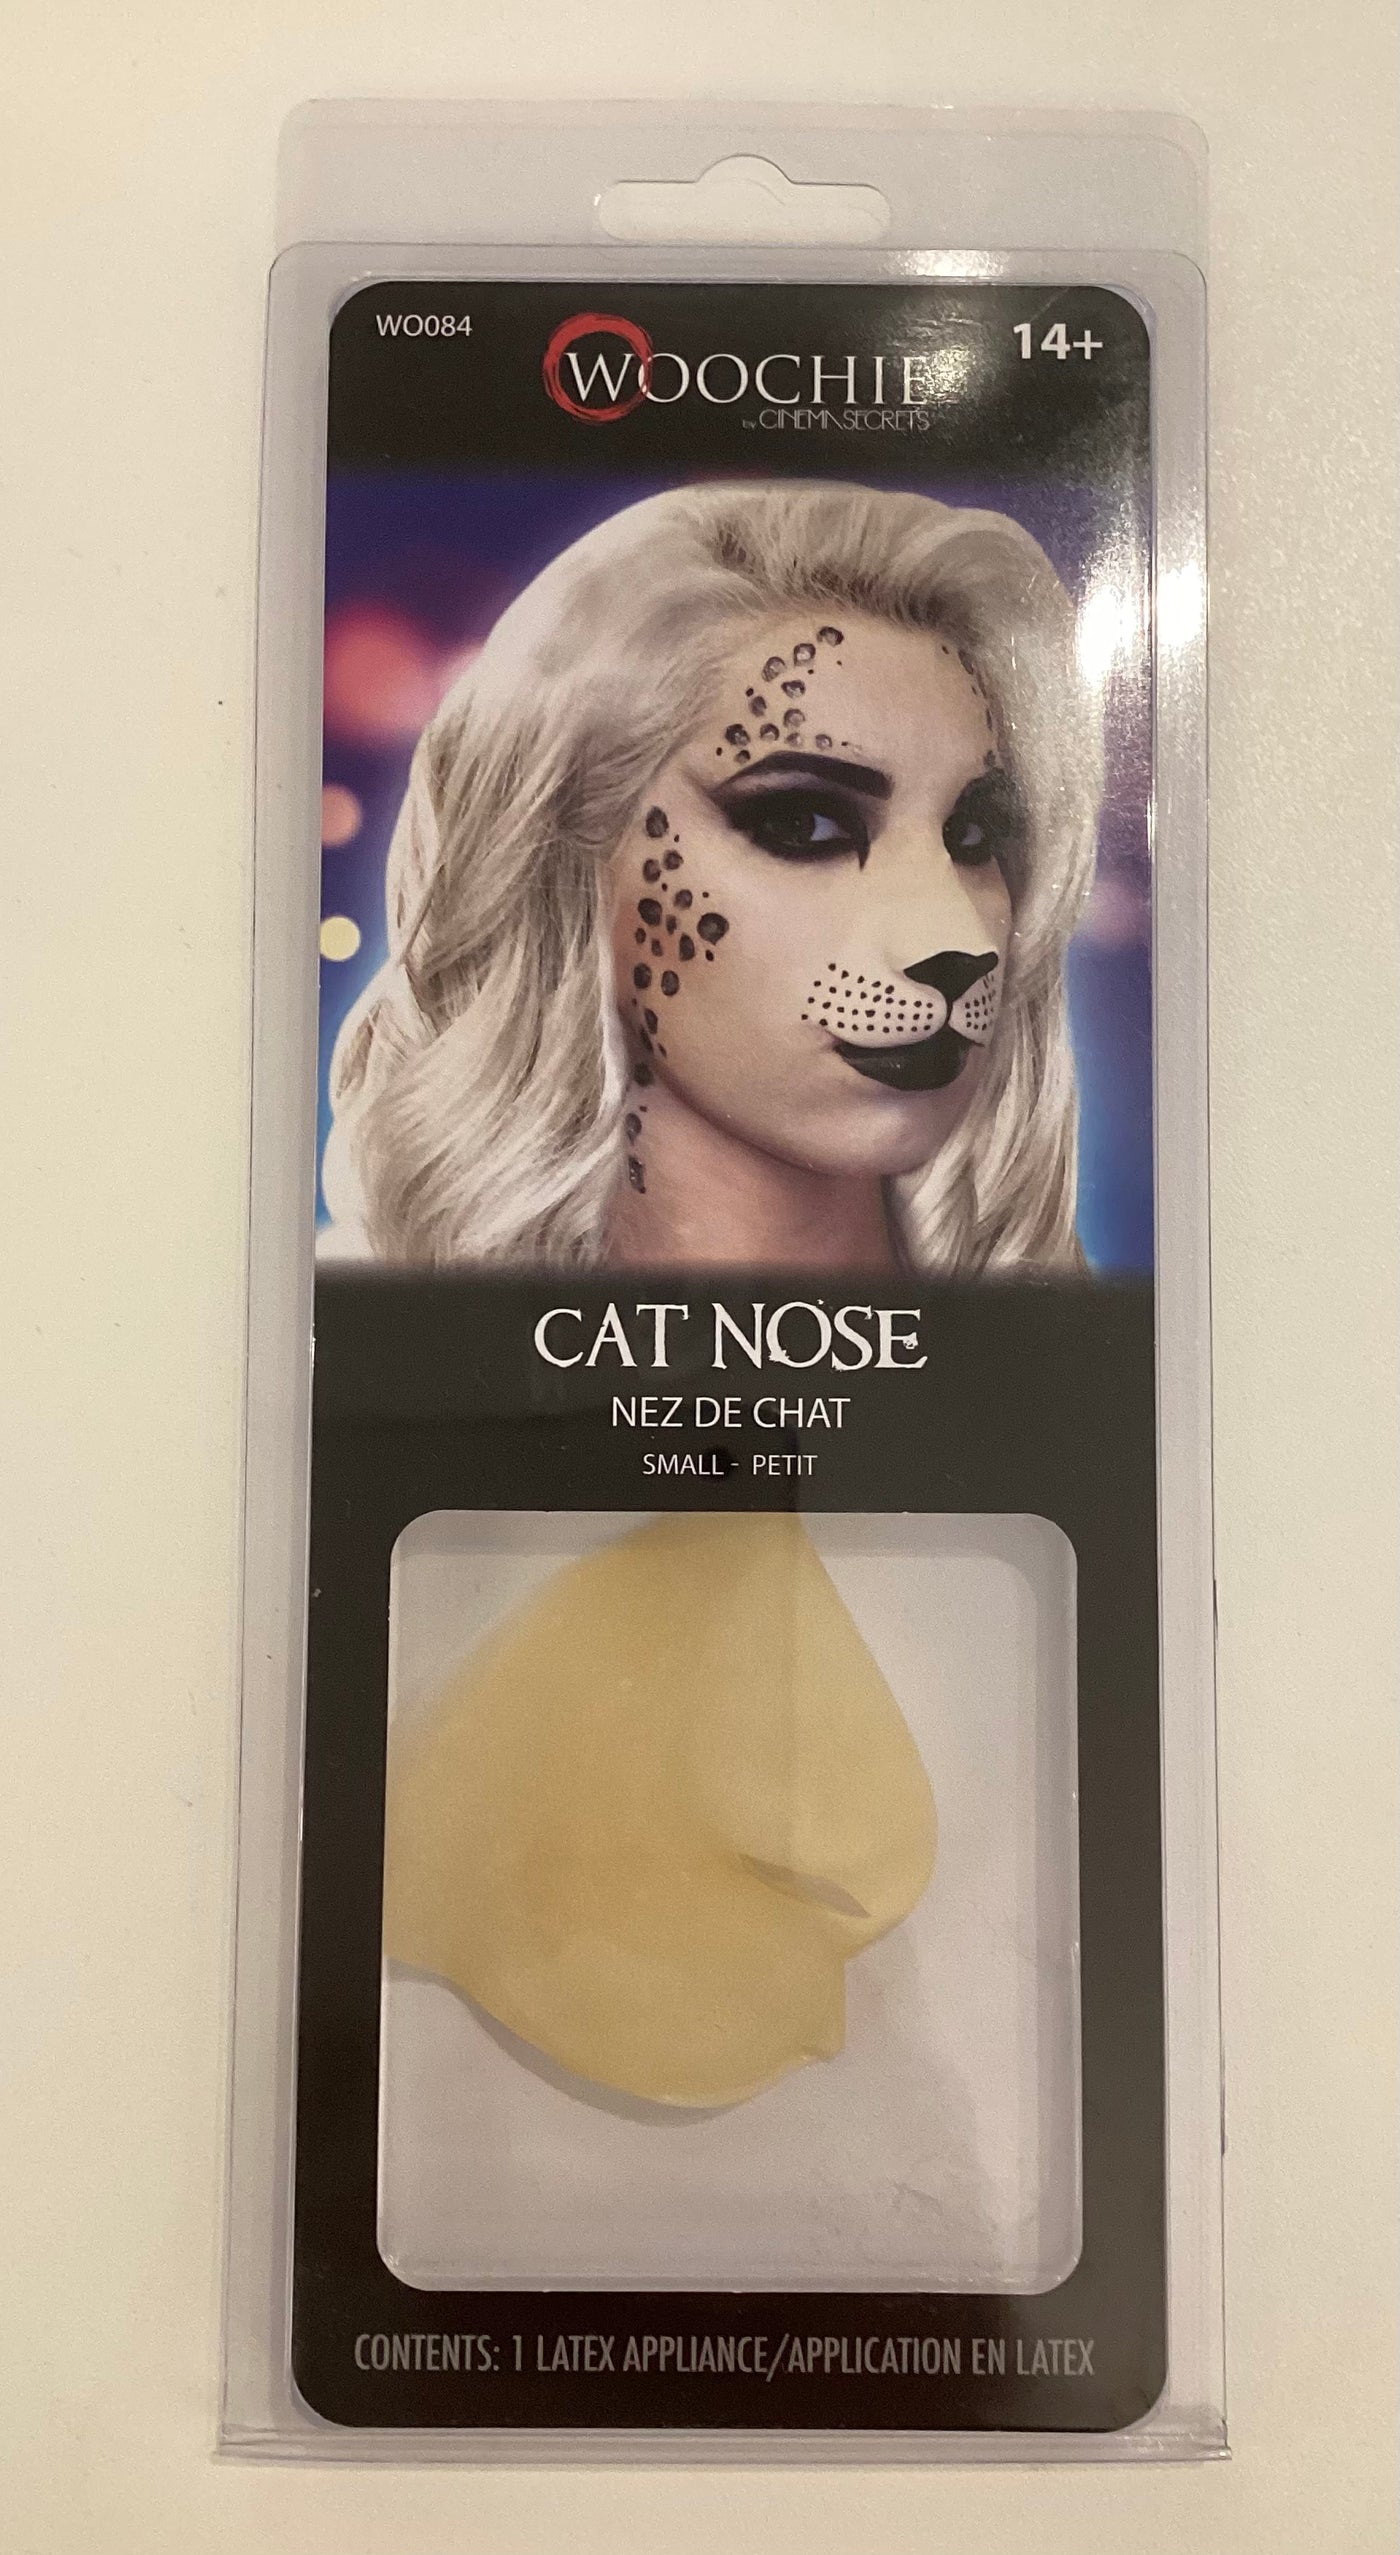 Woochie cat nose